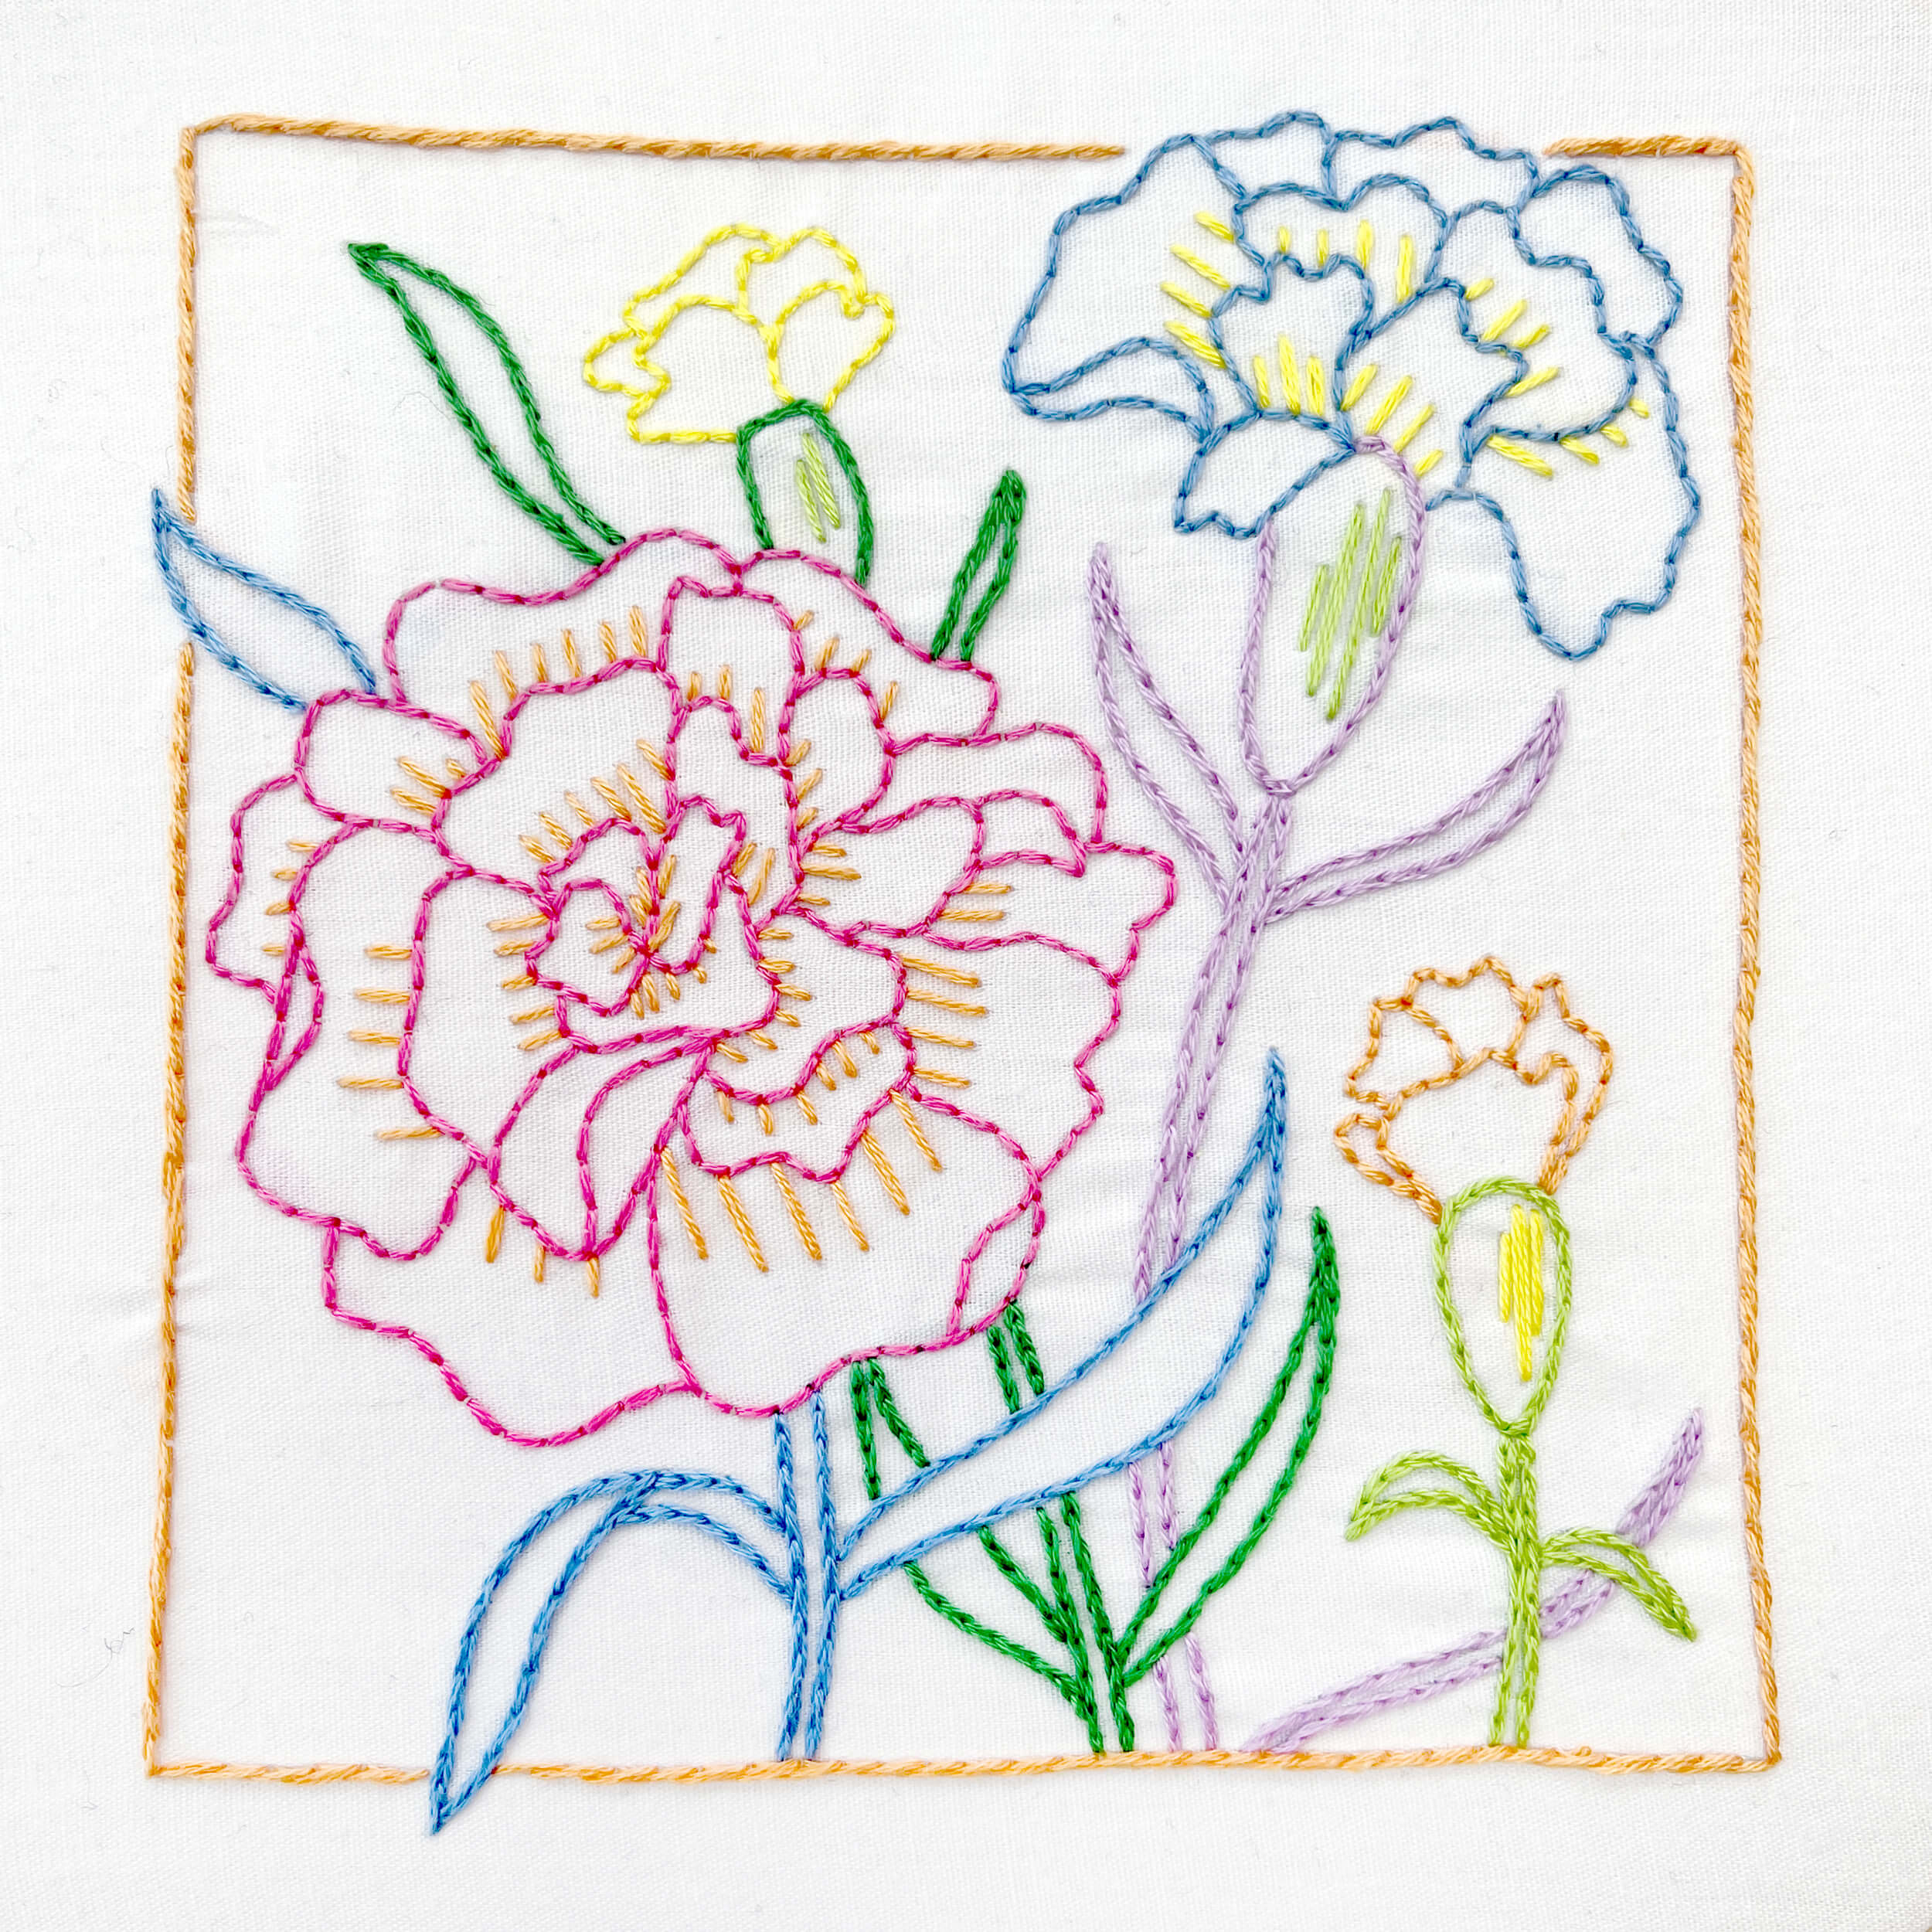 January Carnation finished embroidery pattern